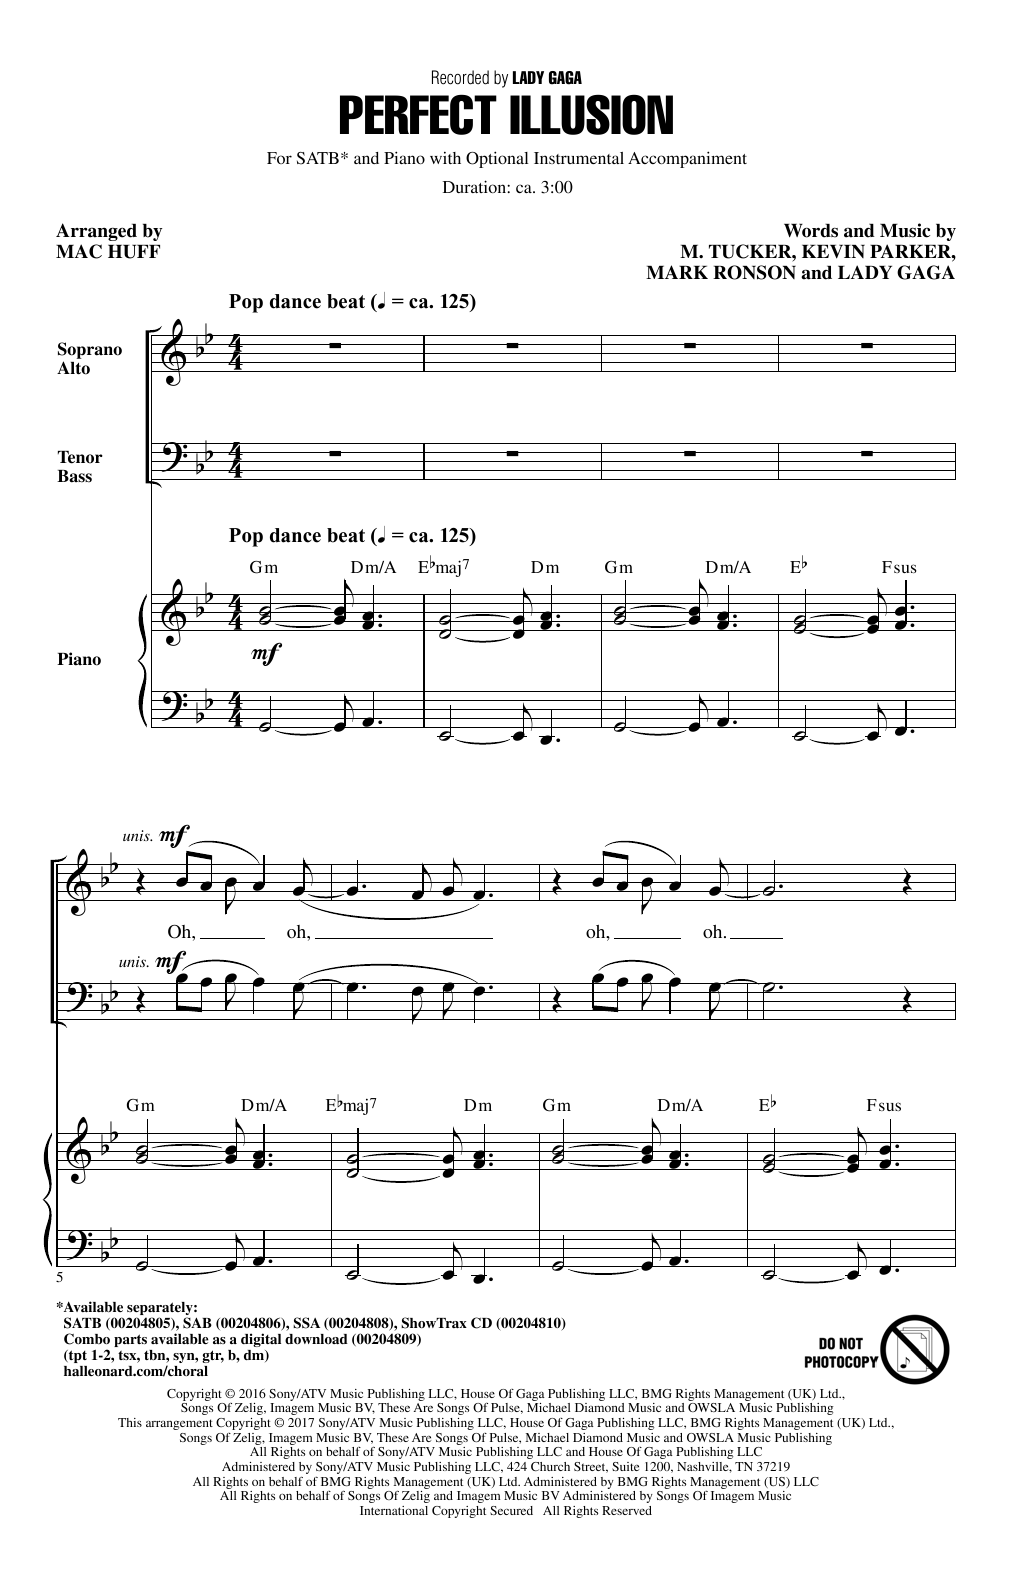 Mac Huff Perfect Illusion Sheet Music Notes & Chords for SAB - Download or Print PDF